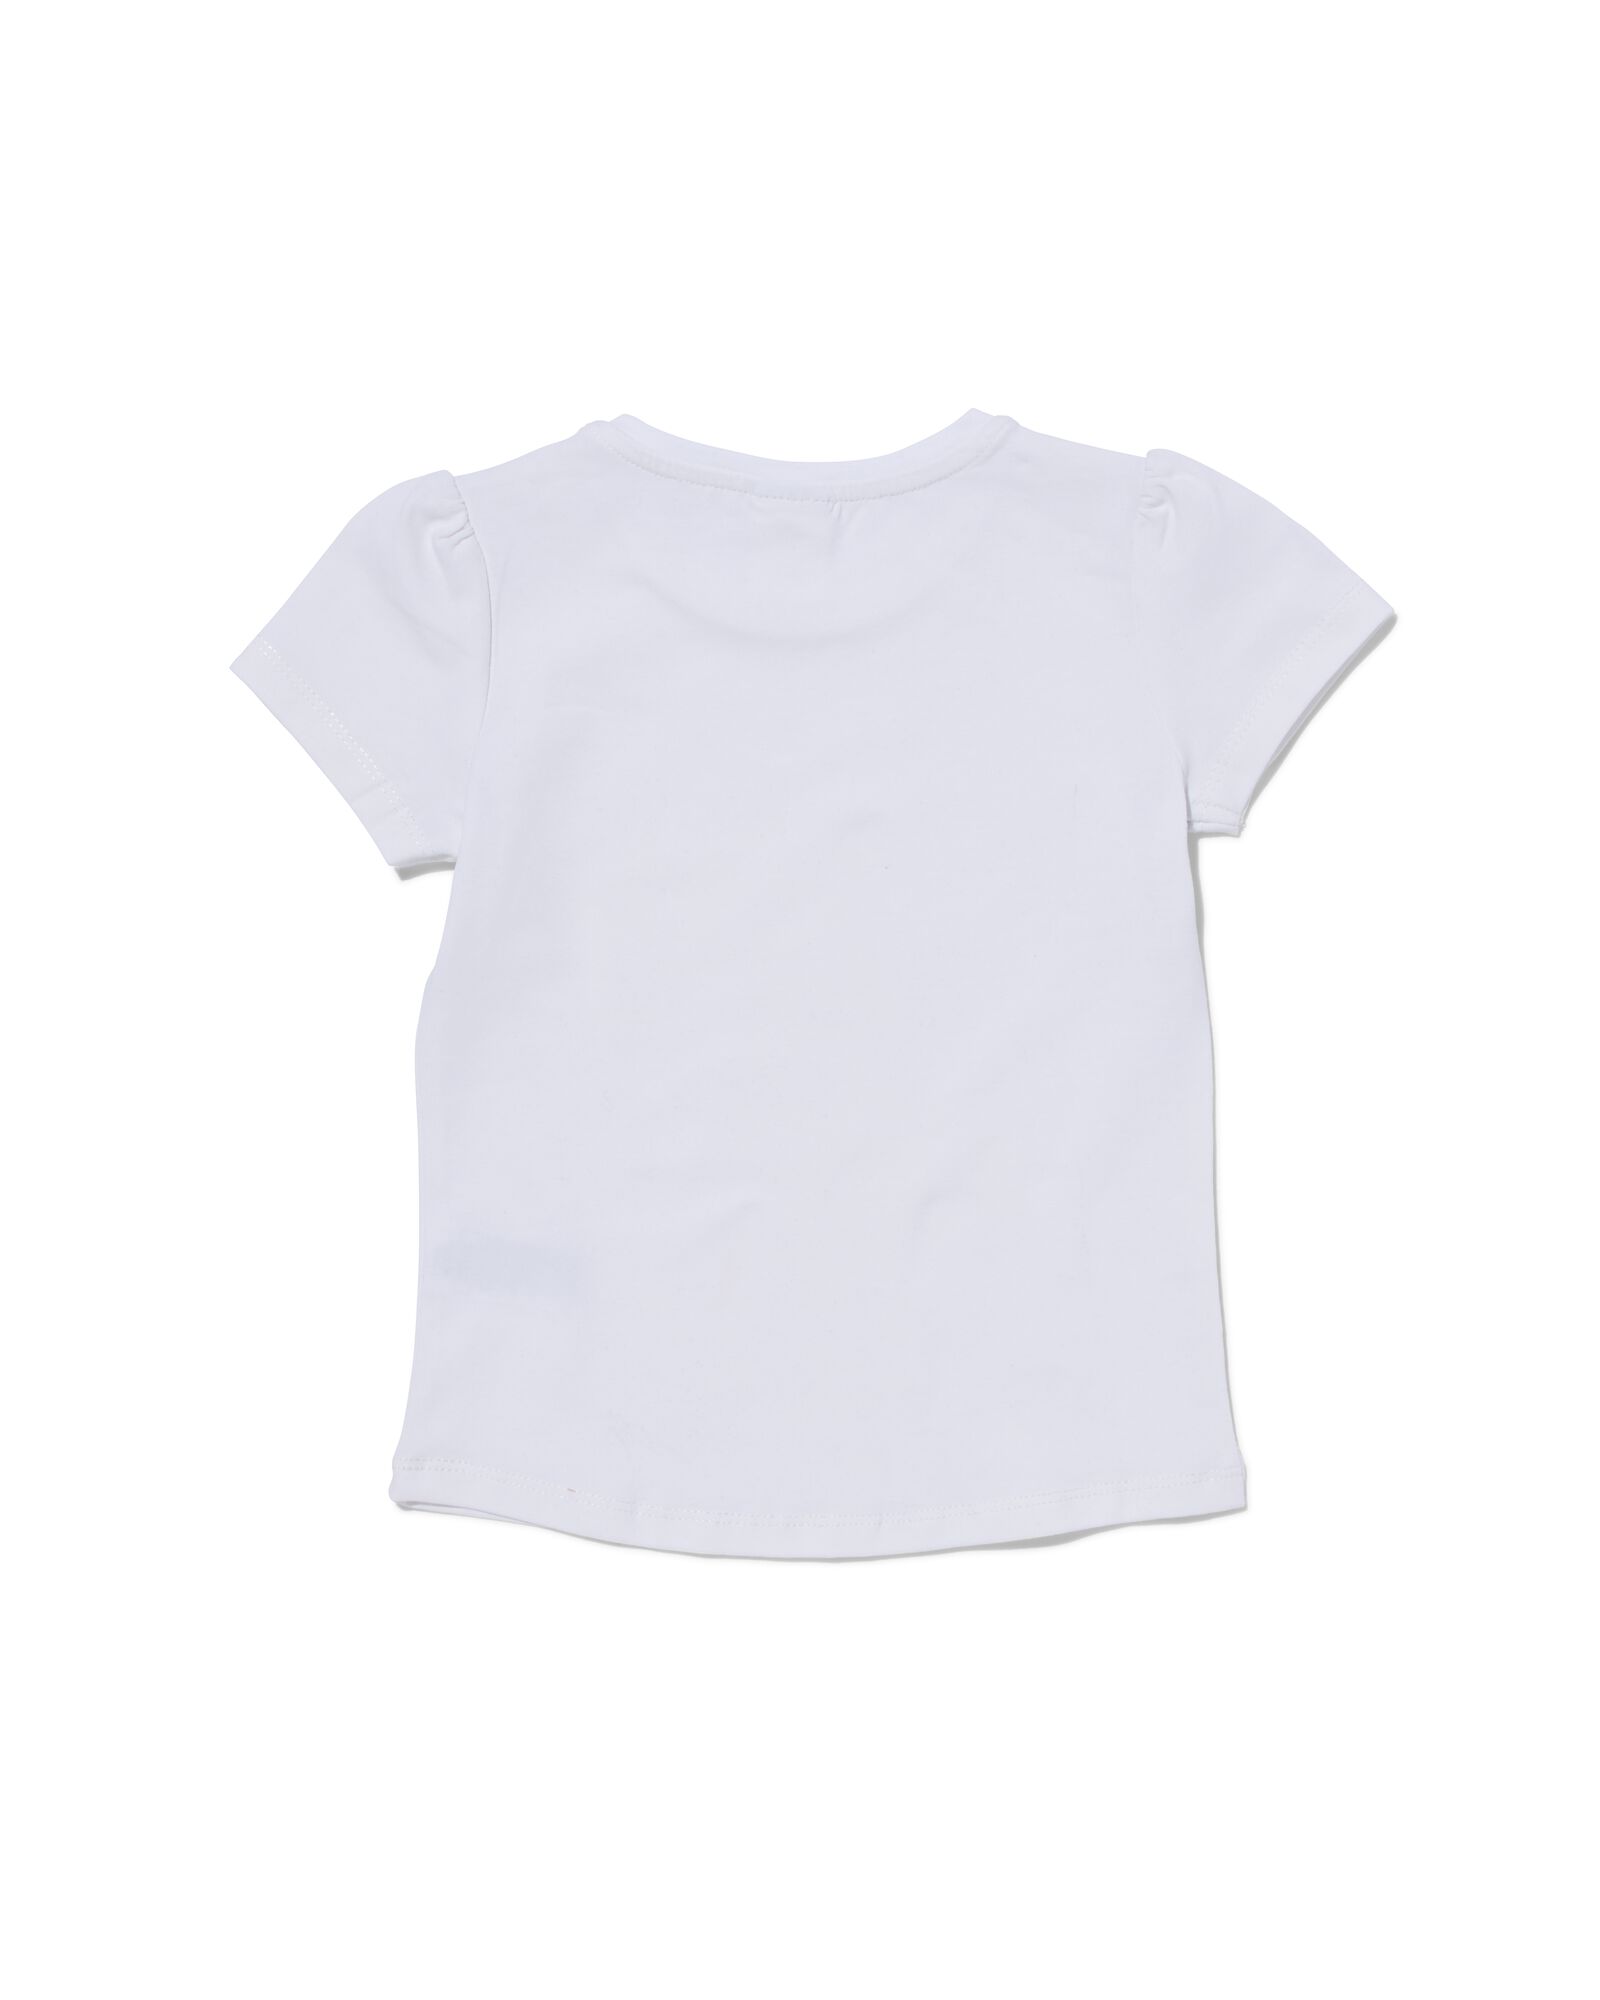 kinder t-shirts - 2 stuks wit 158/164 - 30843936 - HEMA